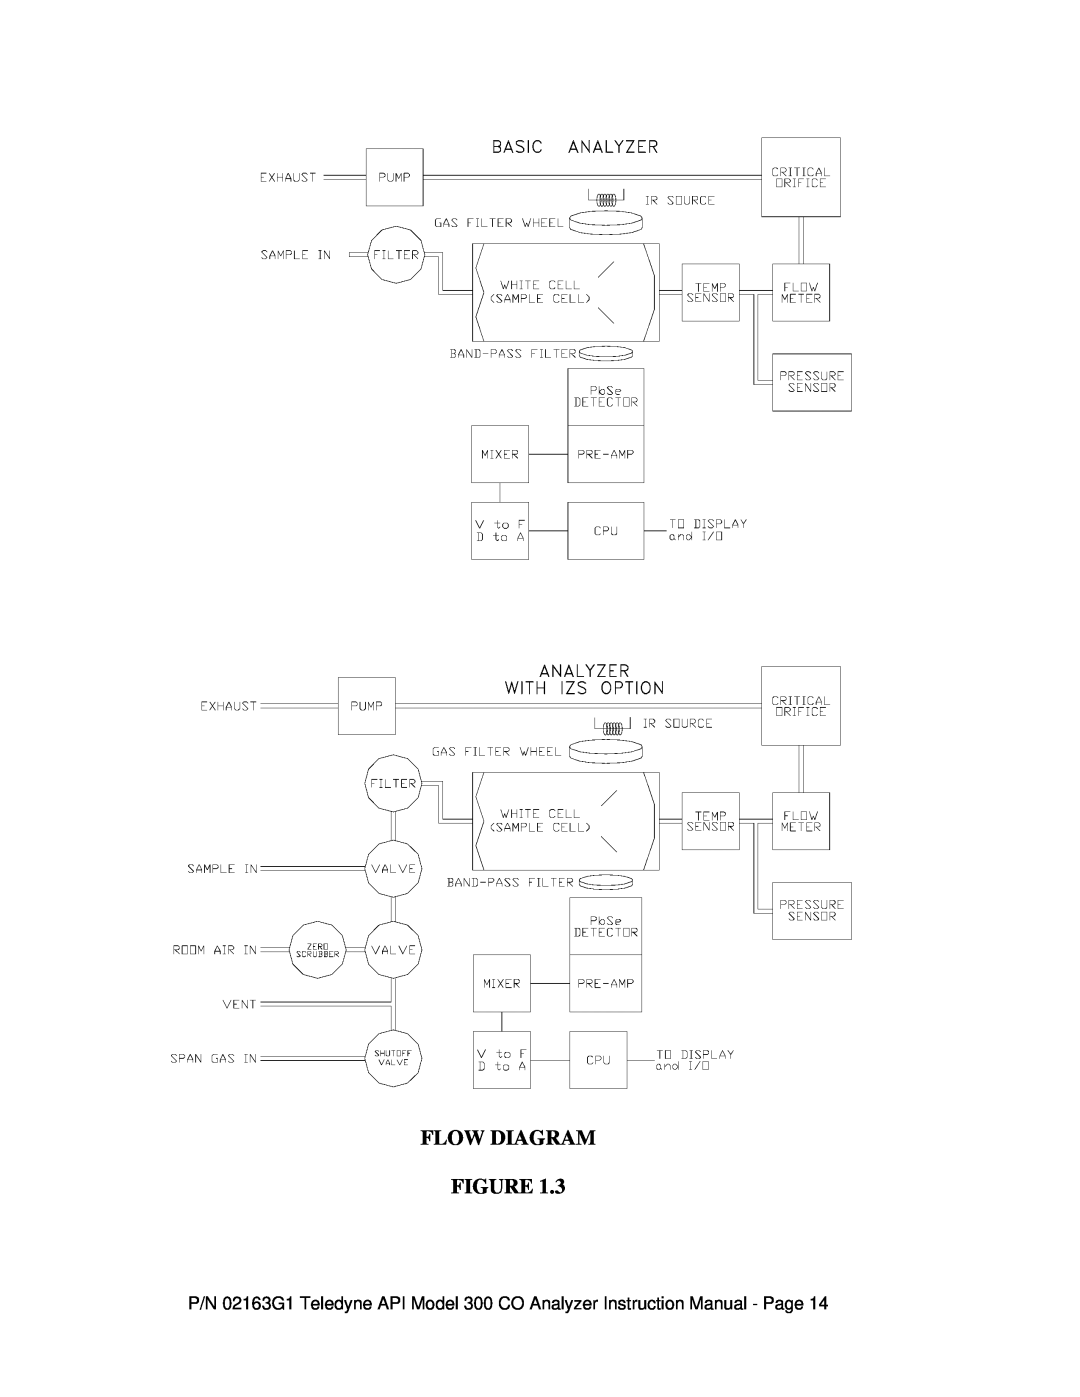 Teledyne 300 instruction manual Flow Diagram Figure 